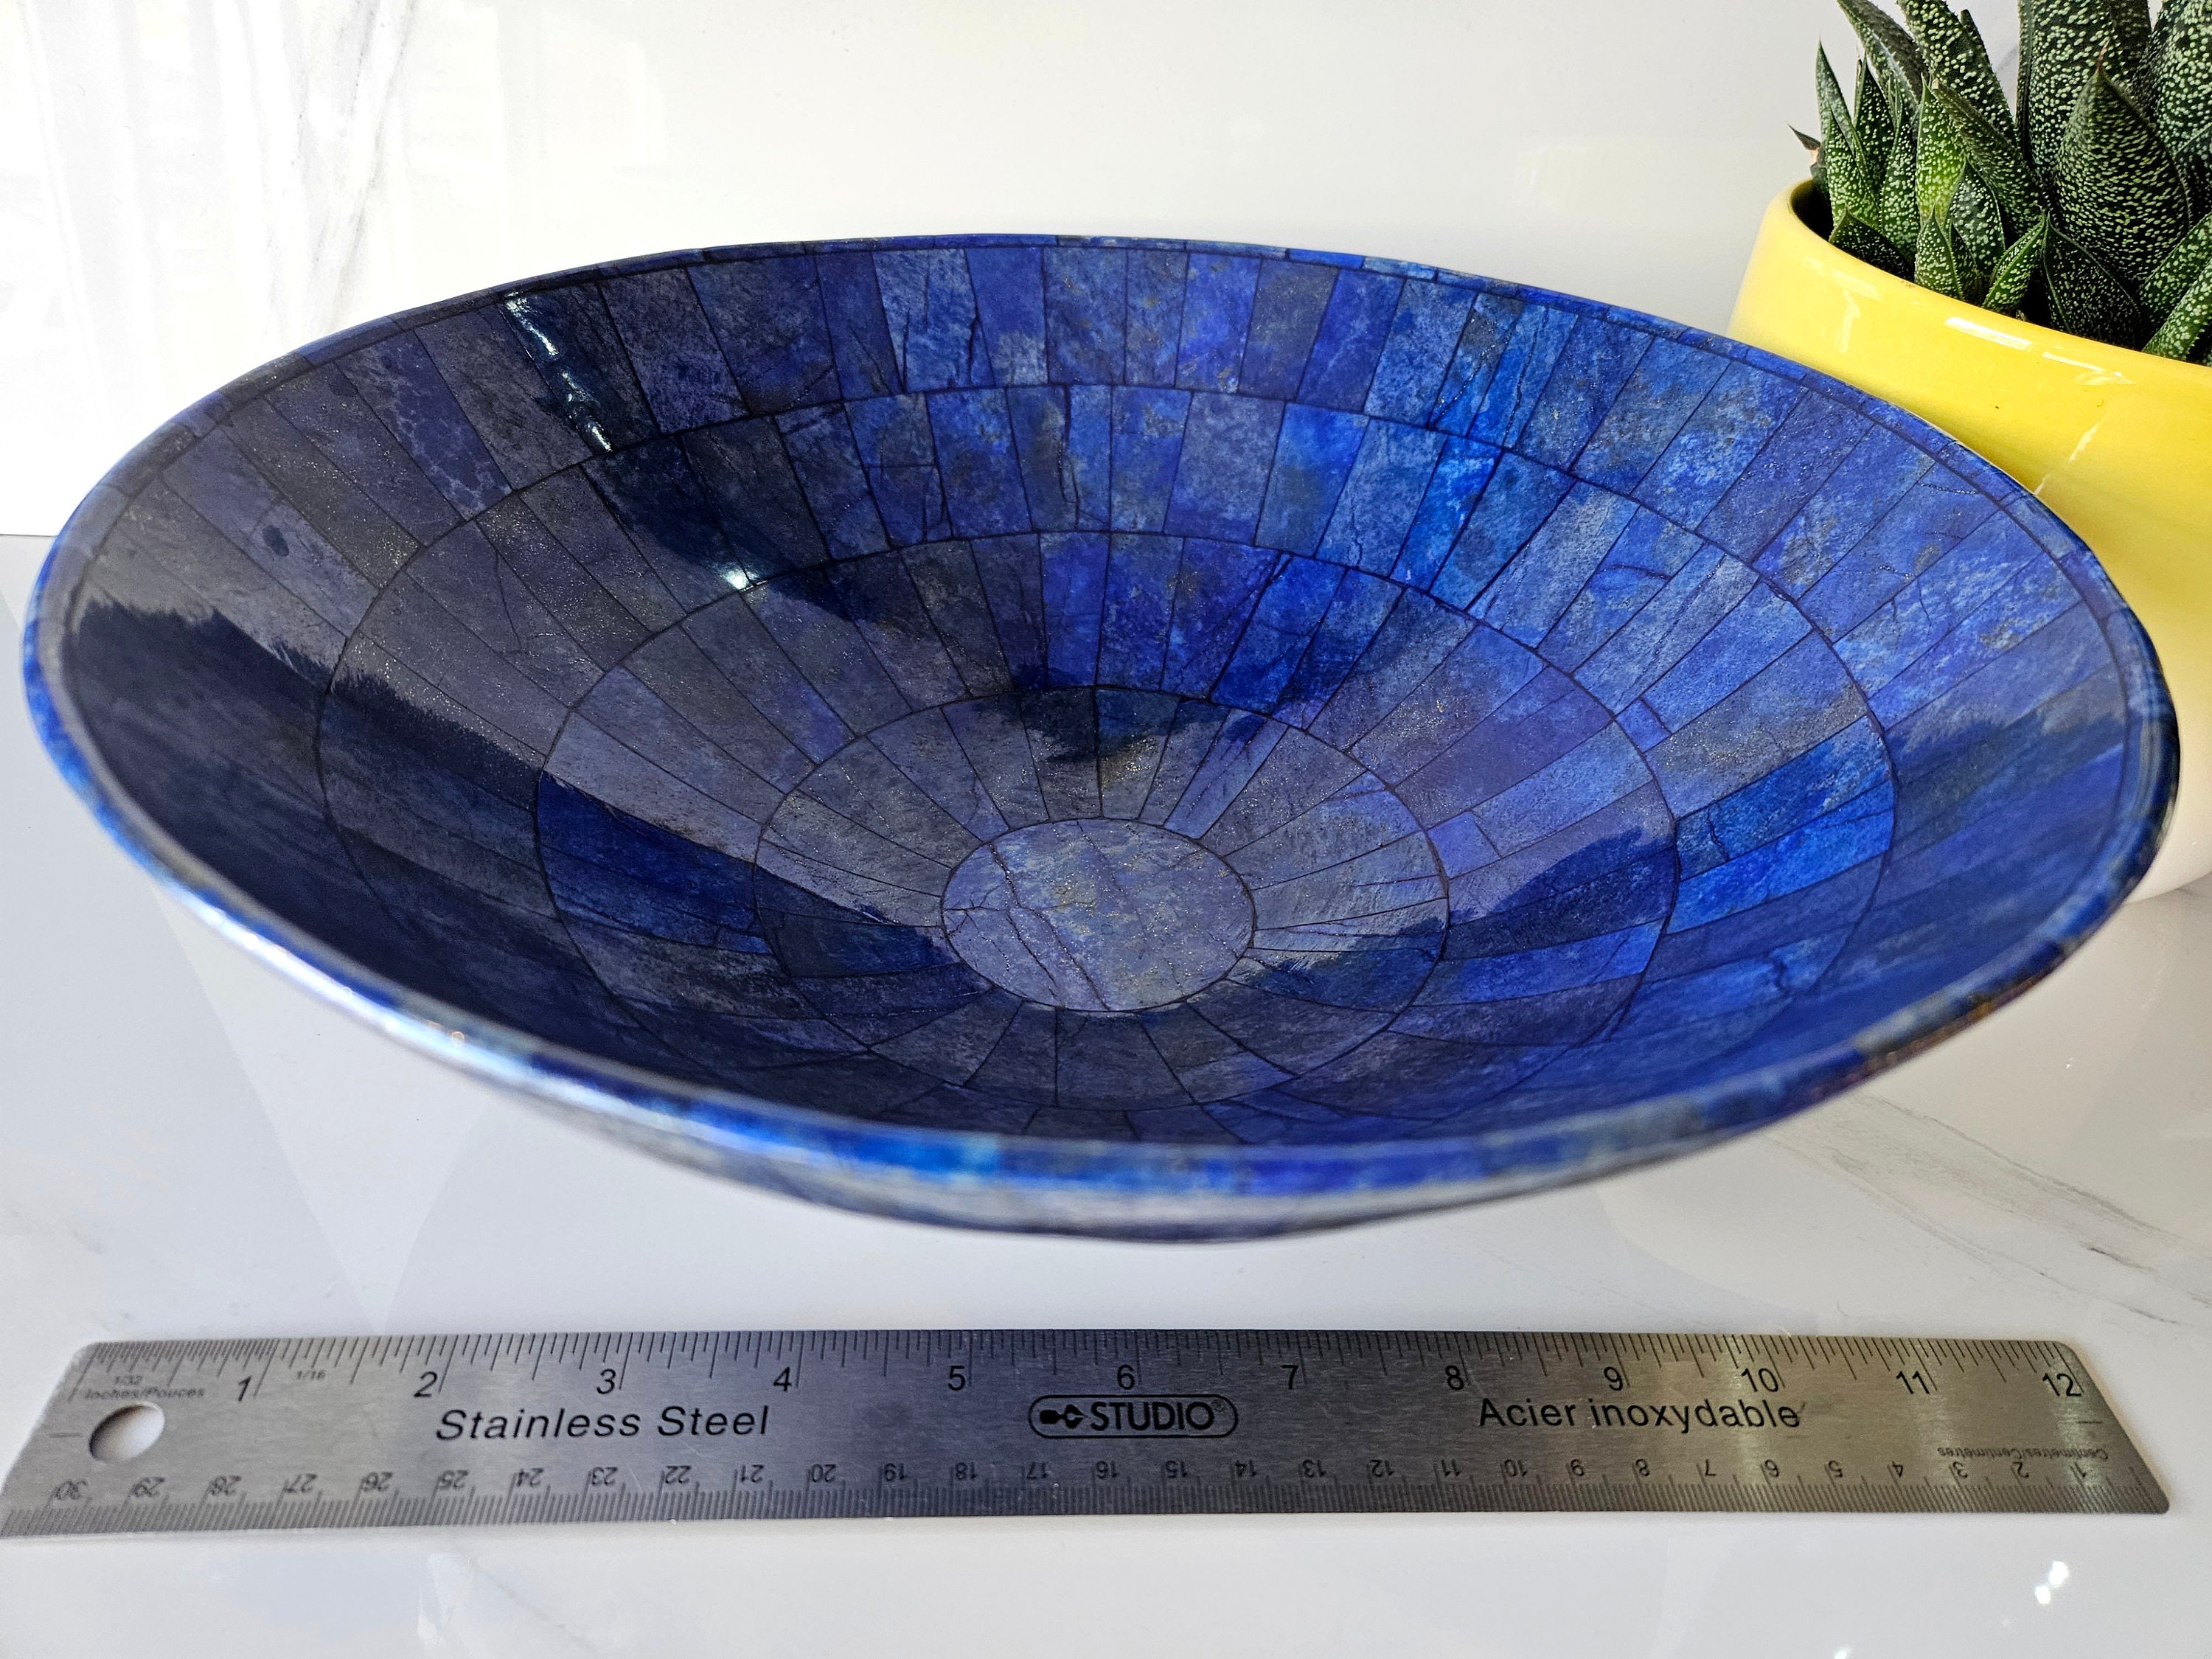 30 Cm Hand Crafted Lapis Lazuli Bowl Ovel Shape Stunning Royal Blue Color Handmade bowl from Badakhshsan Afghanistan